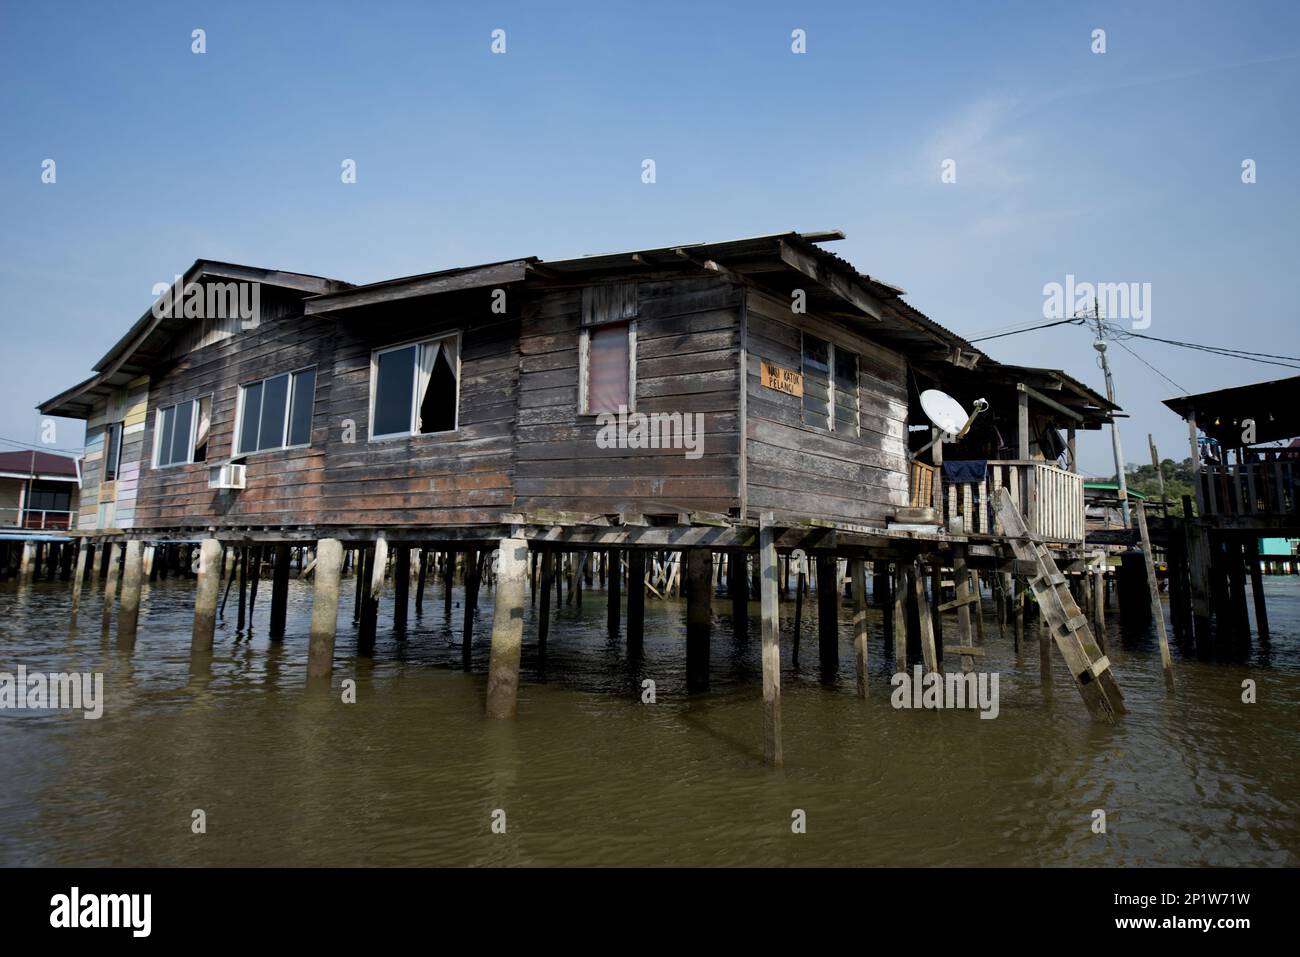 Hut on stilts in the river, water village (Kampong Ayer), Brunei River, Bandar Seri Begawan, Brunei Stock Photo